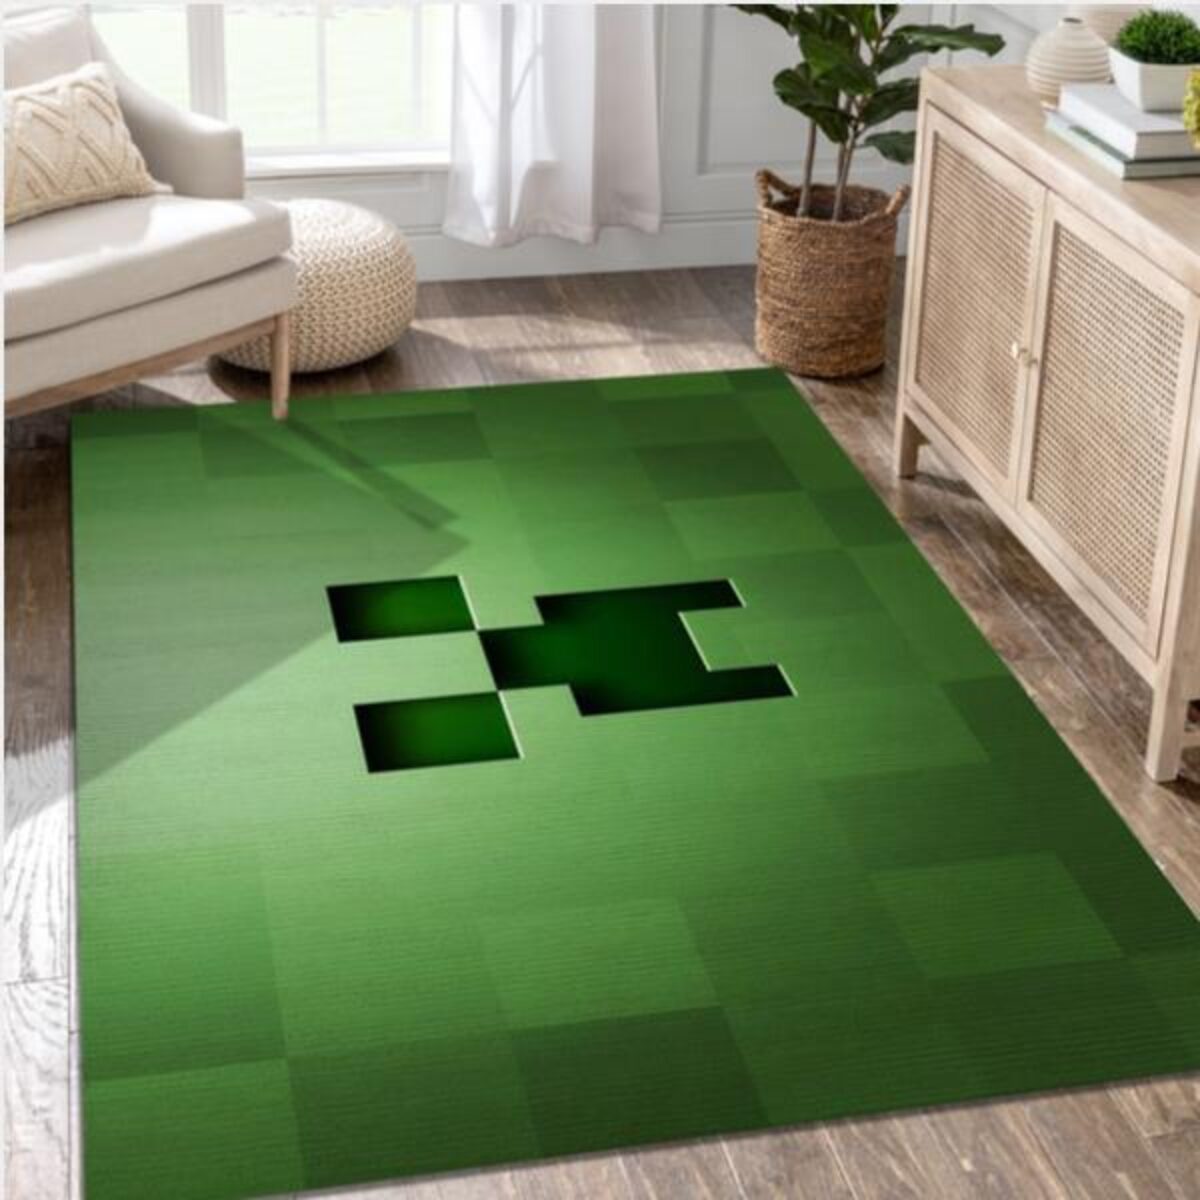 Minecraft Creeper Area Rug | Creeper Rug | 39-Inch Square Area Rug